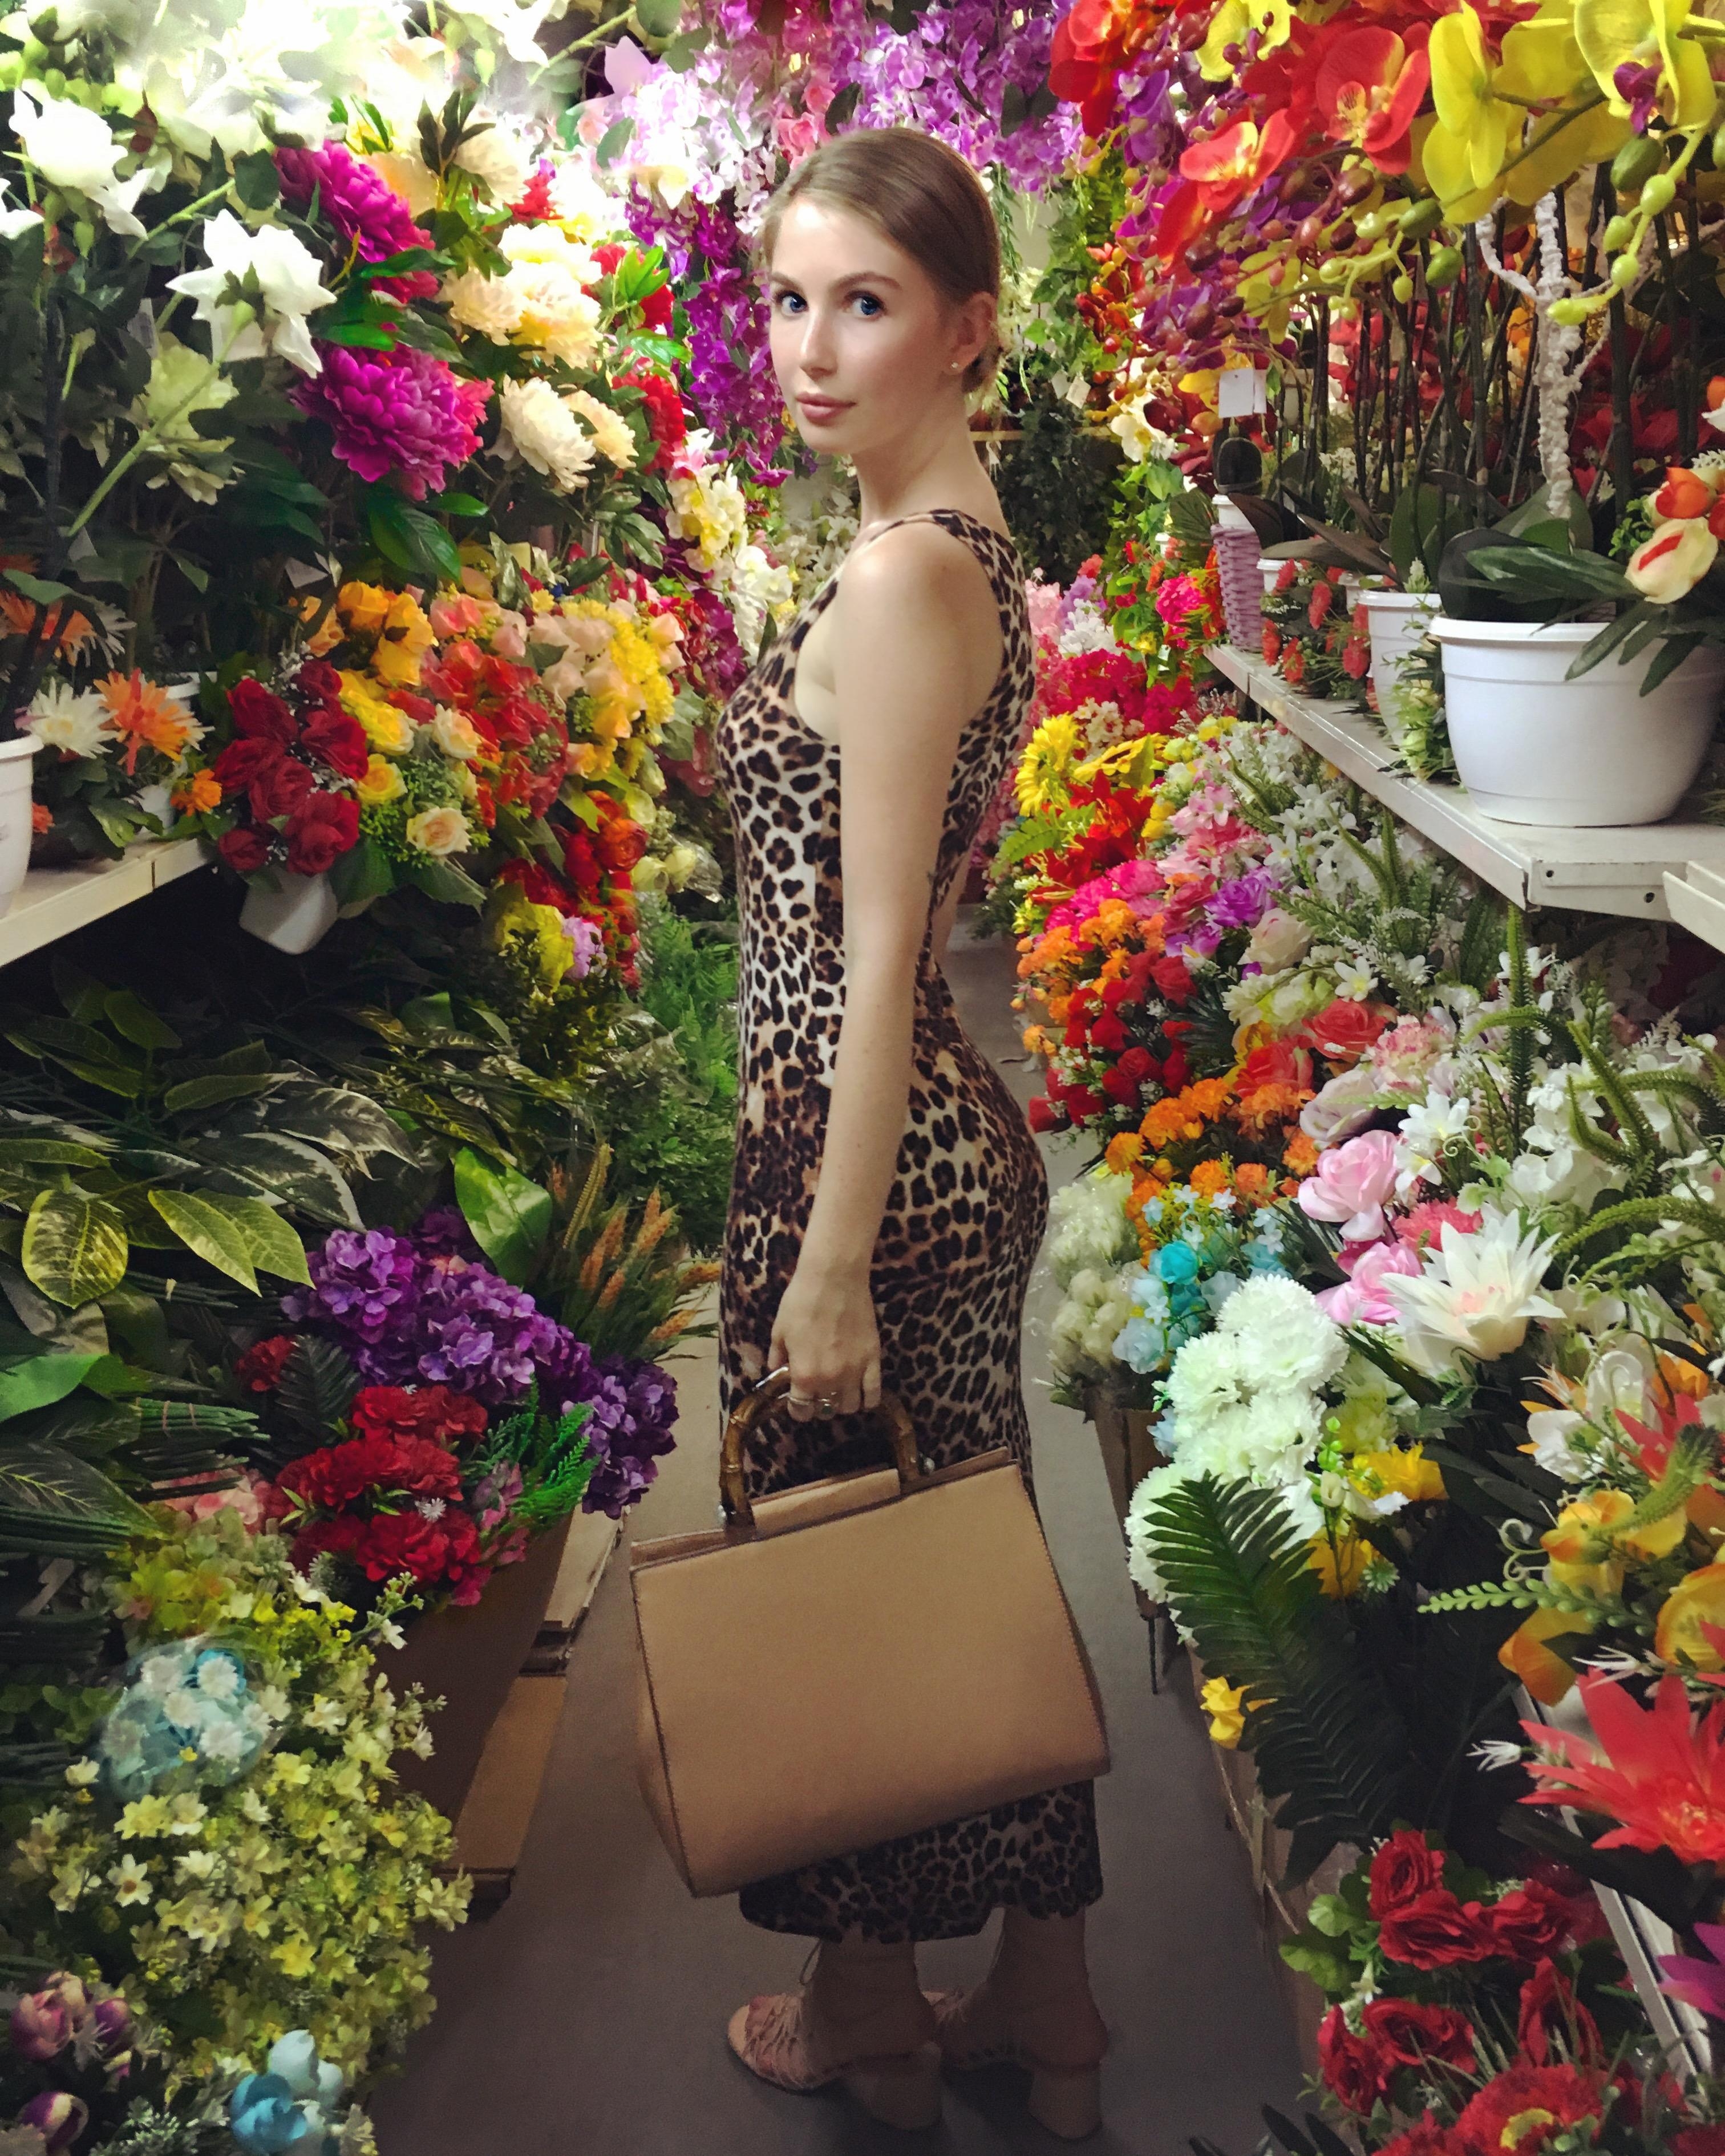 #flowers #plantlady #paradise #shopping #decor #interior 